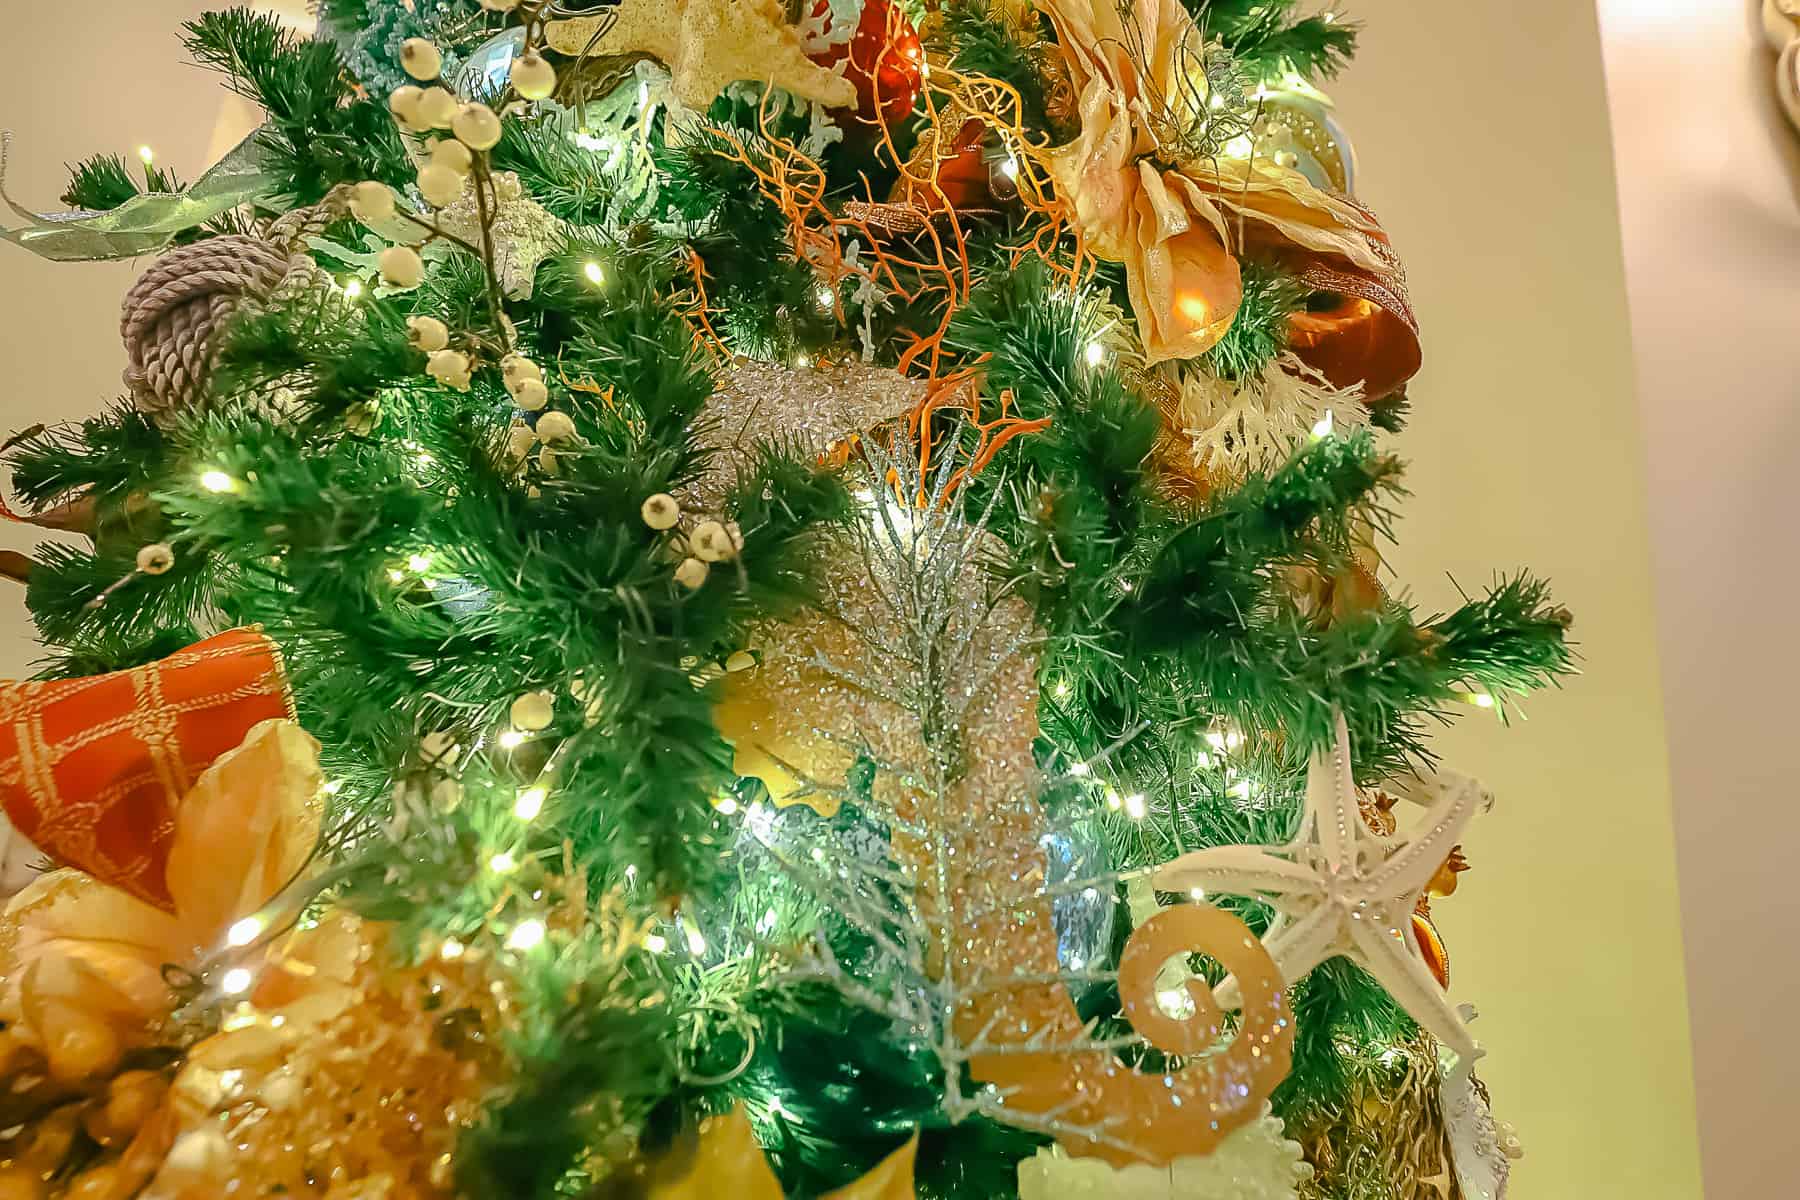 a glittery seahorse on the Christmas tree 